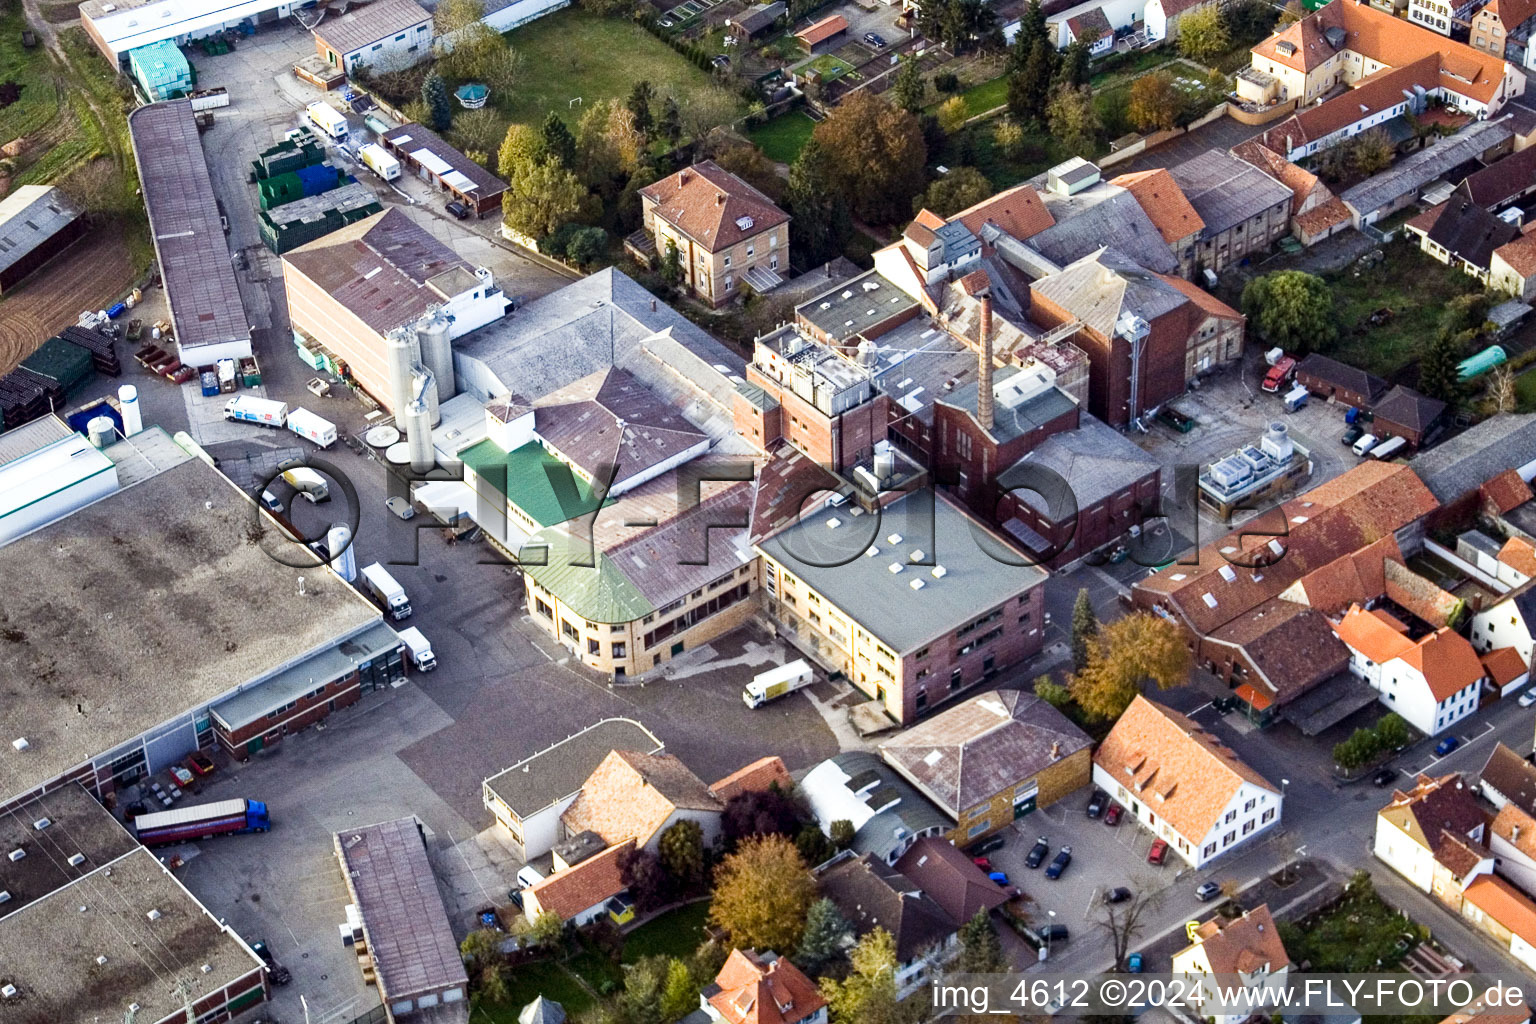 Aerial view of Bellheimer brewery premises in Bellheim in the state Rhineland-Palatinate, Germany